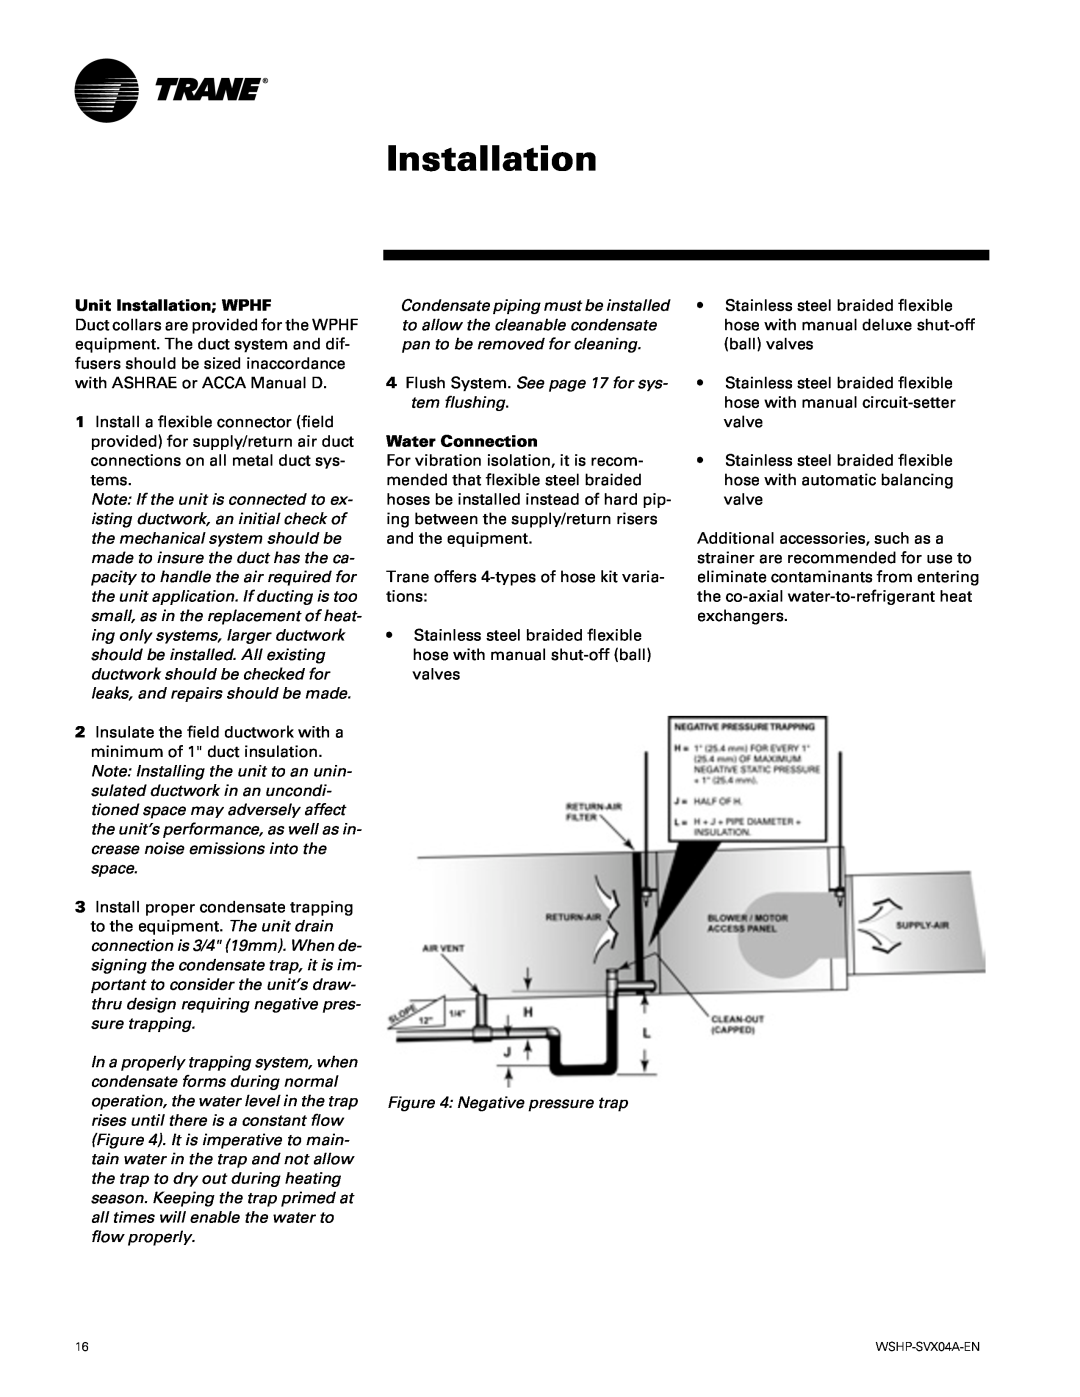 Trane WPVJ manual Unit Installation WPHF, Water Connection 